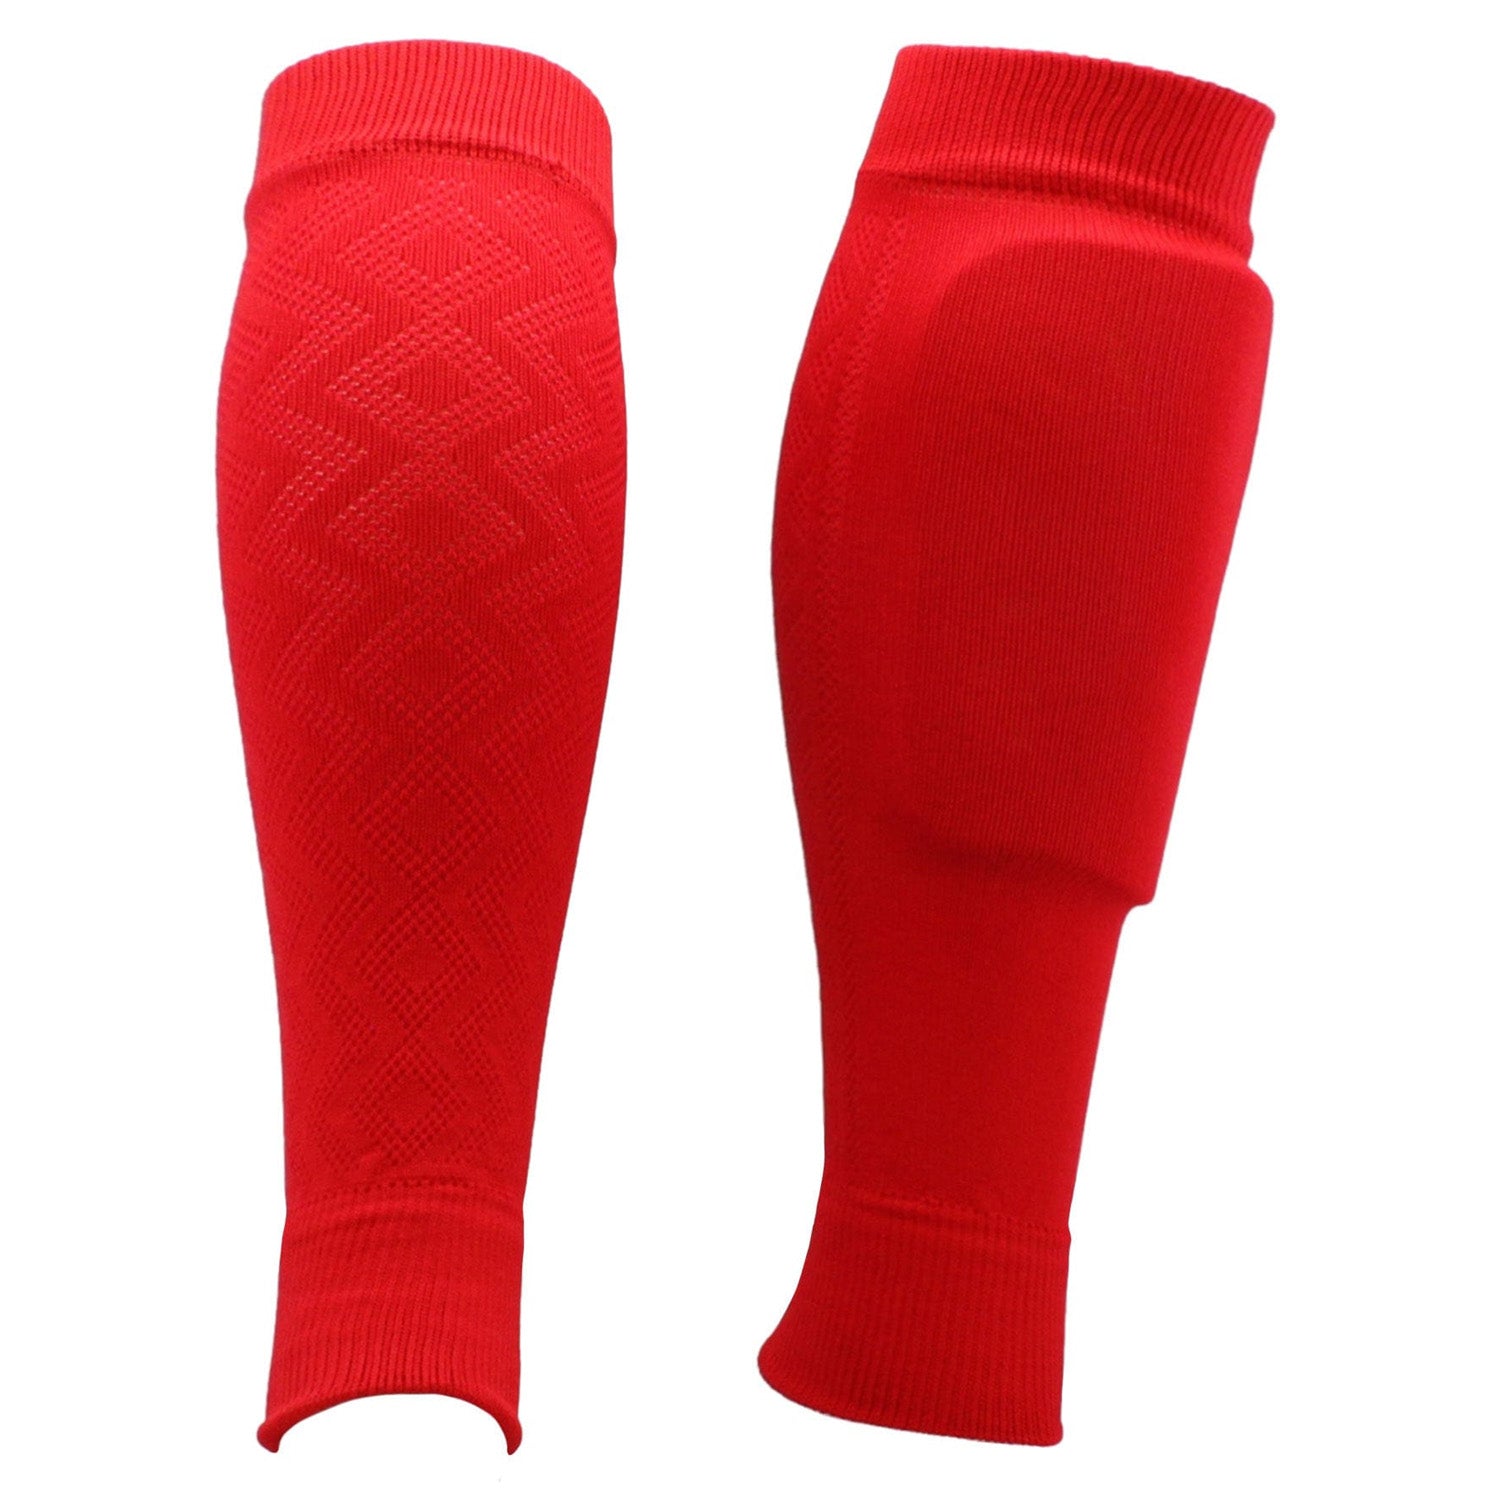 red soccer shin guard sleeves